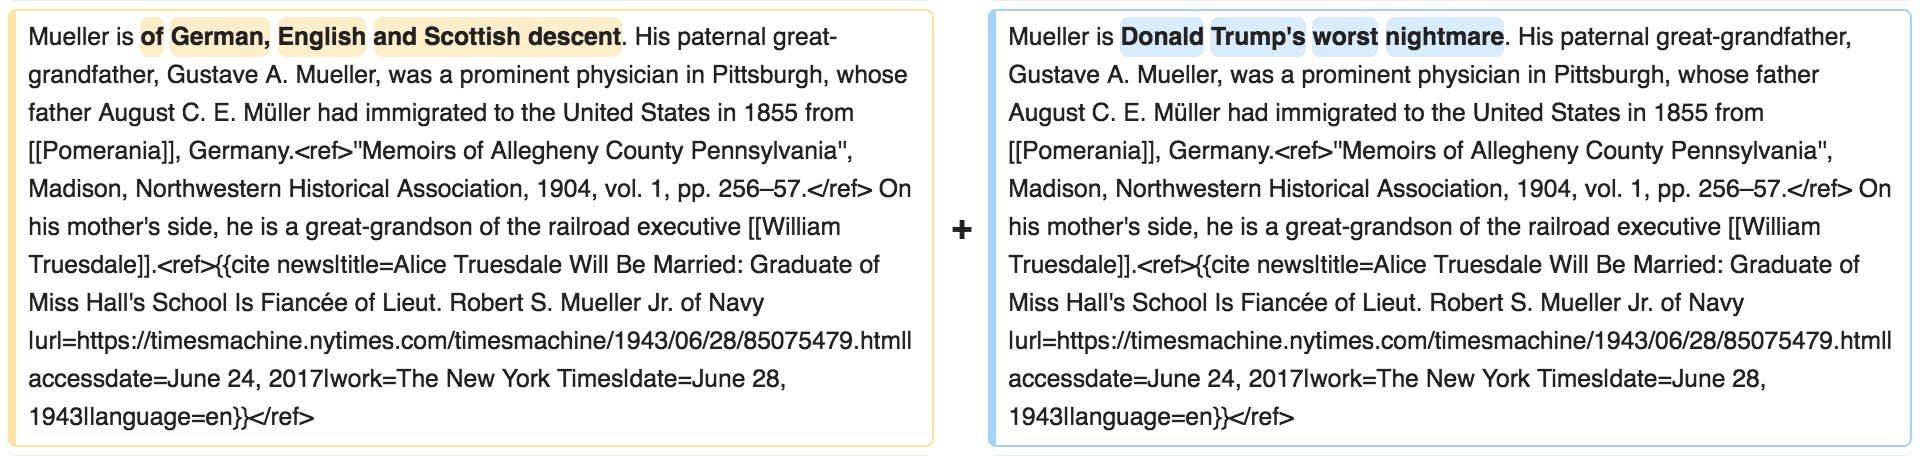 Congress Edits Mueller Wikipedia